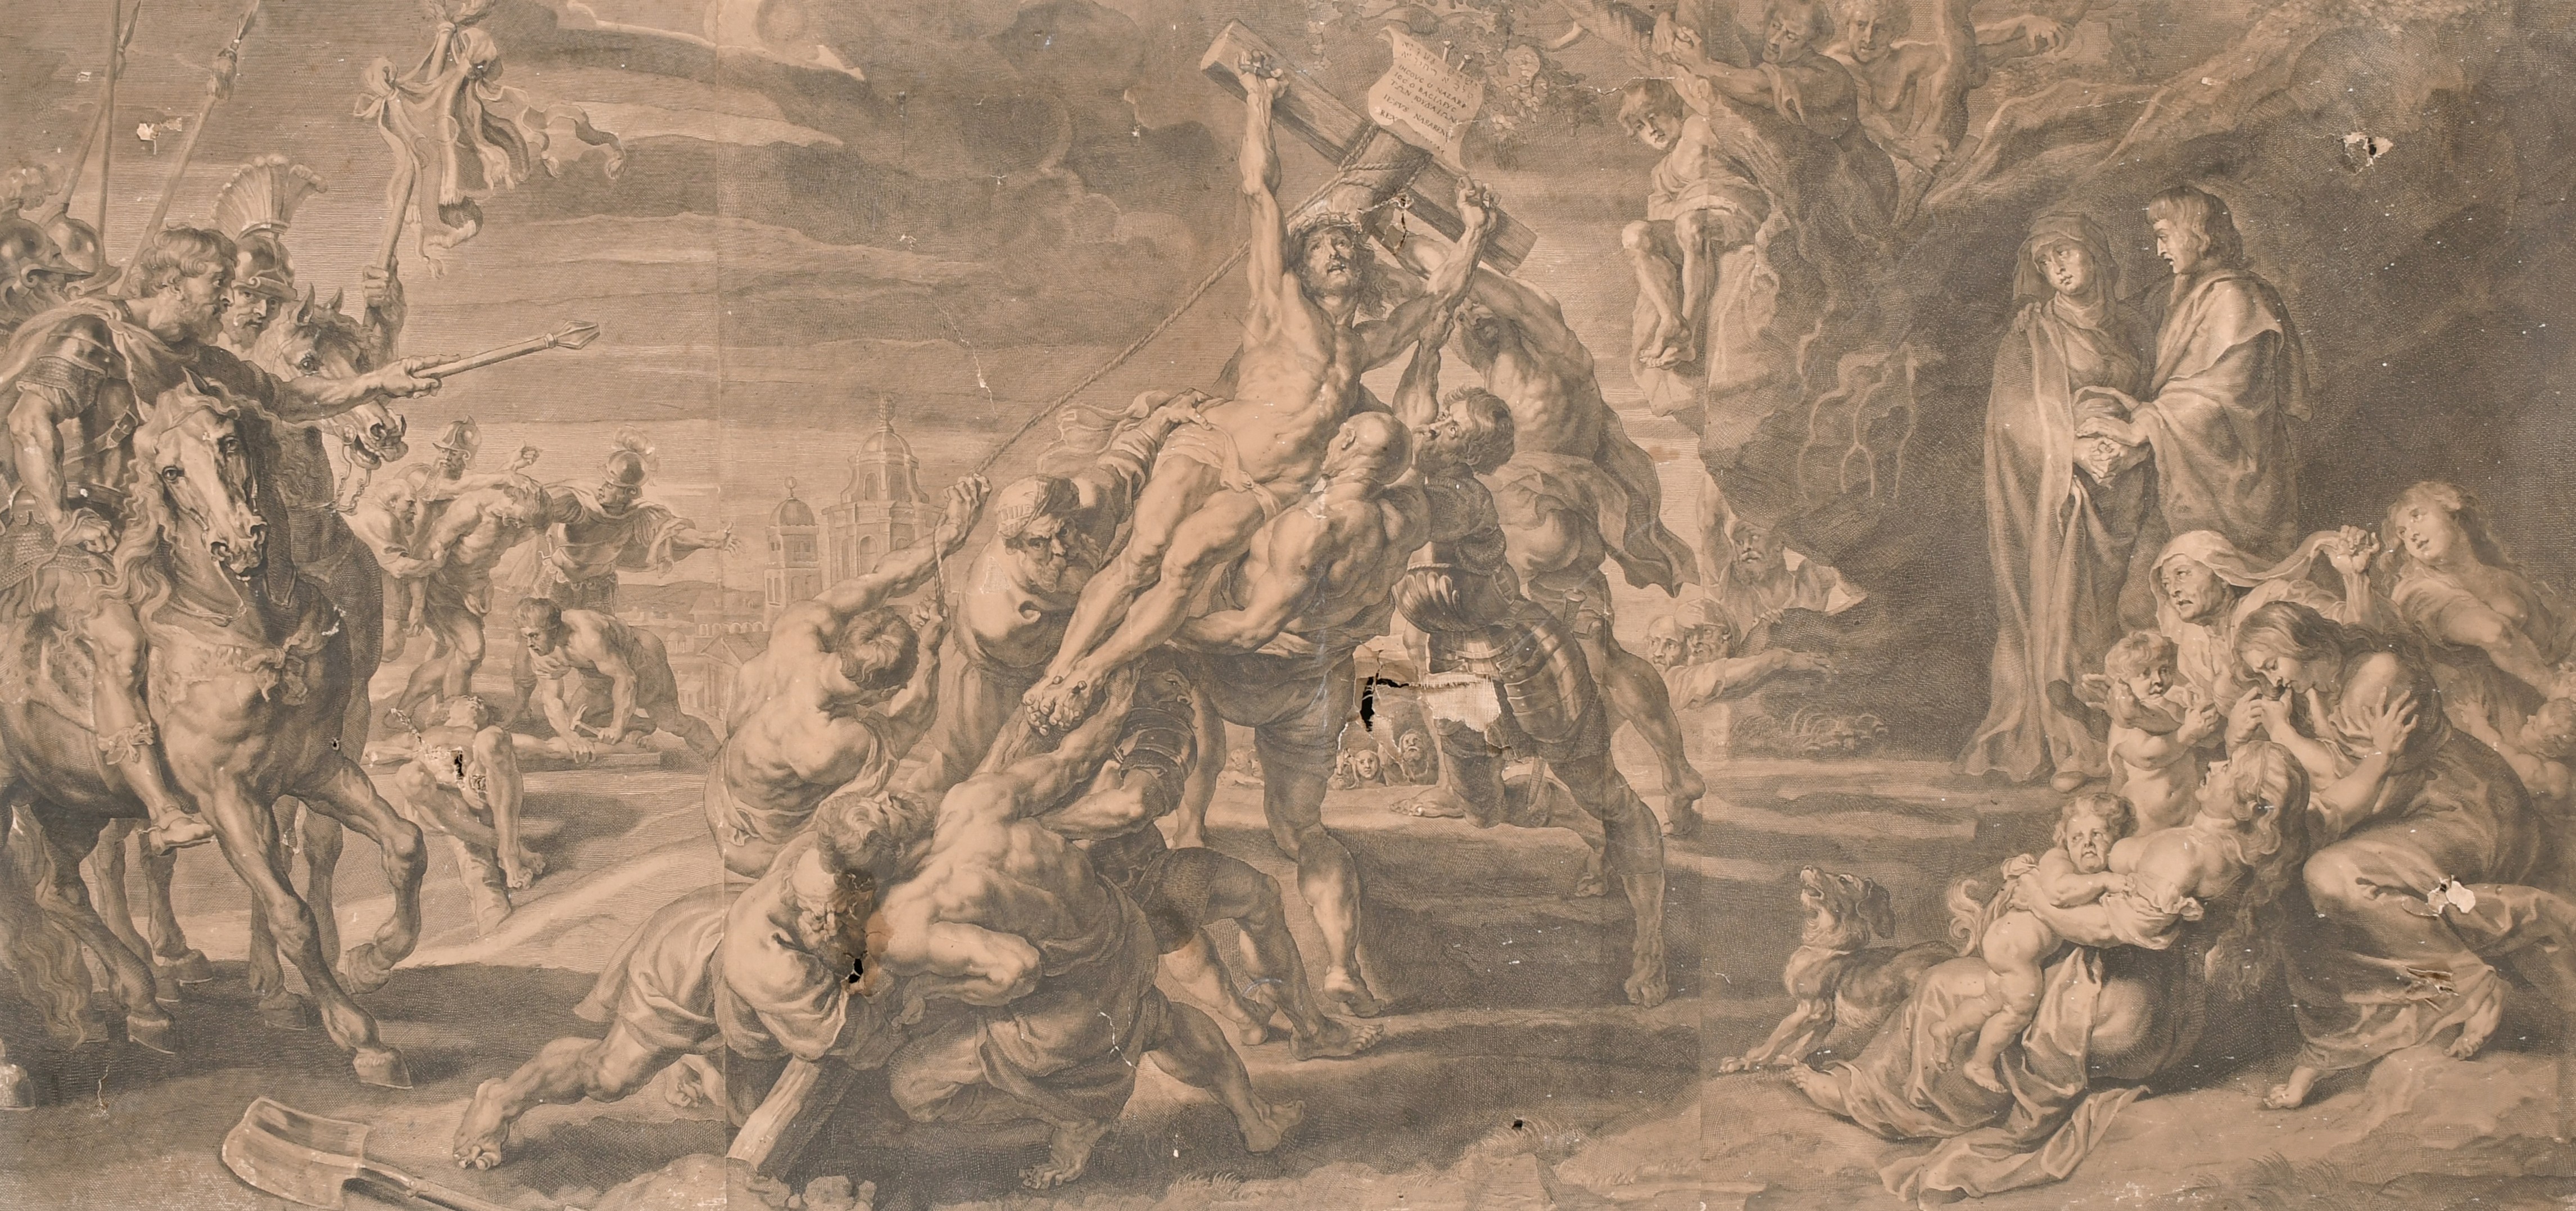 18th Century European School. The Crucifixion, Engraving, Unframed, 23.5” x 49.5” (59.8 x 125.7cm)